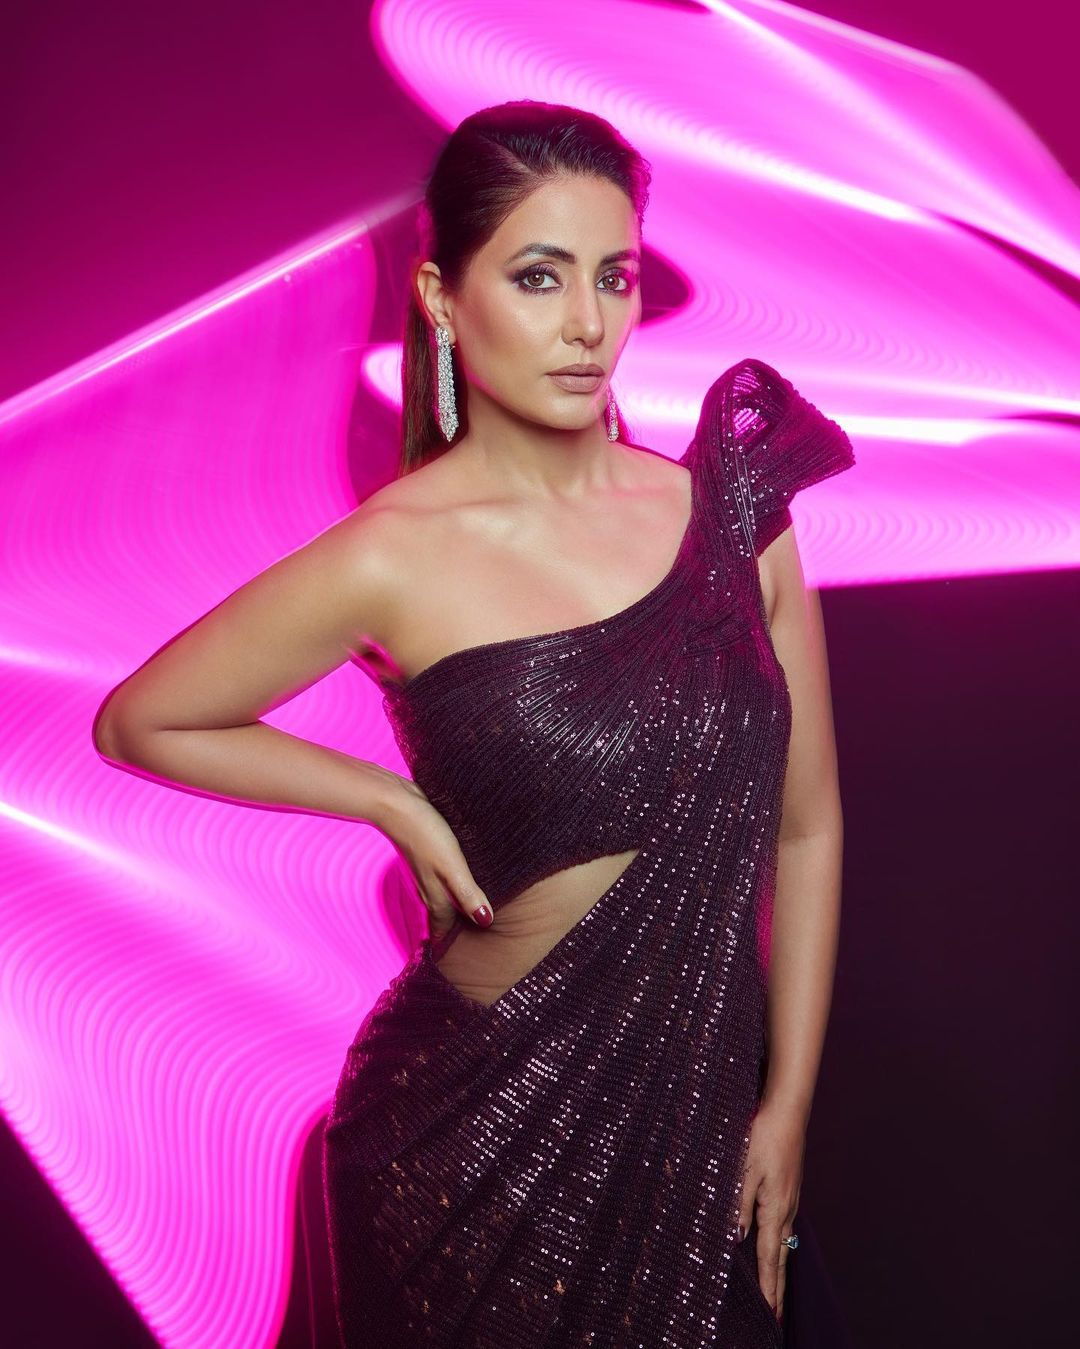 Hina Khan accessorises the look with a pair of sleek diamond earrings